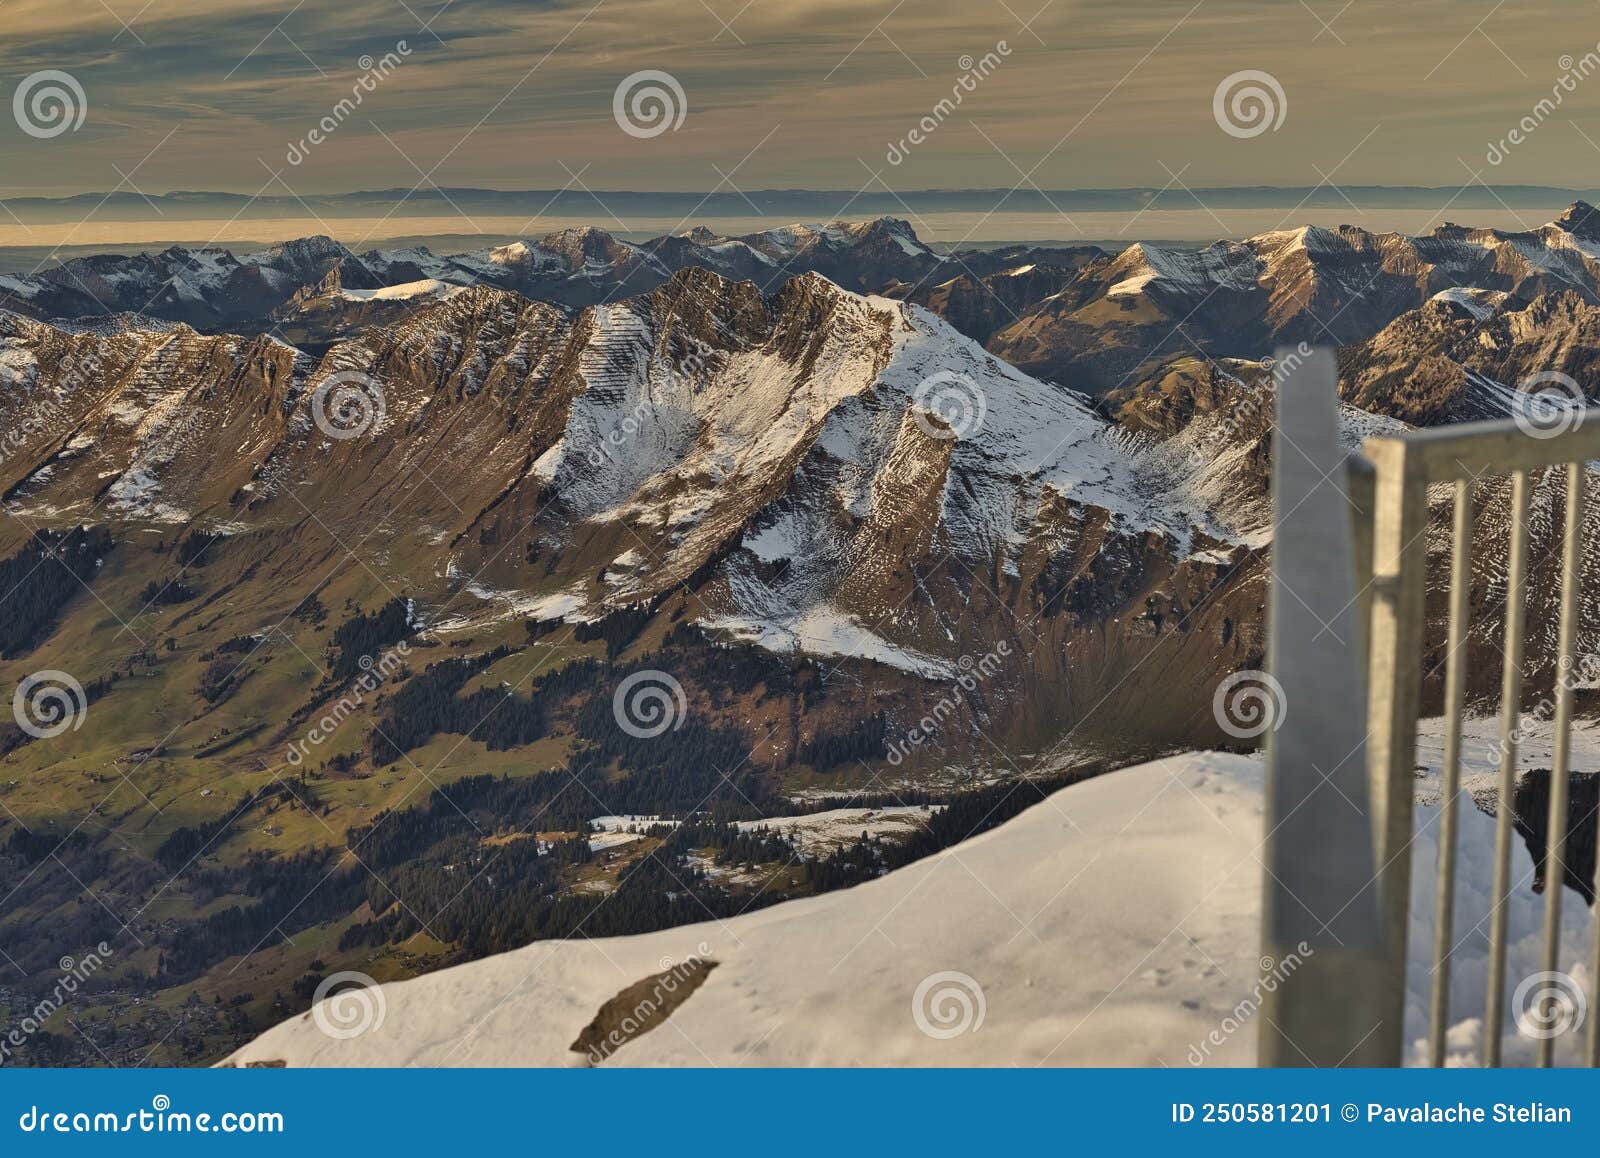 switzerland canton of vaud col de pillon glacier 3000, diableret